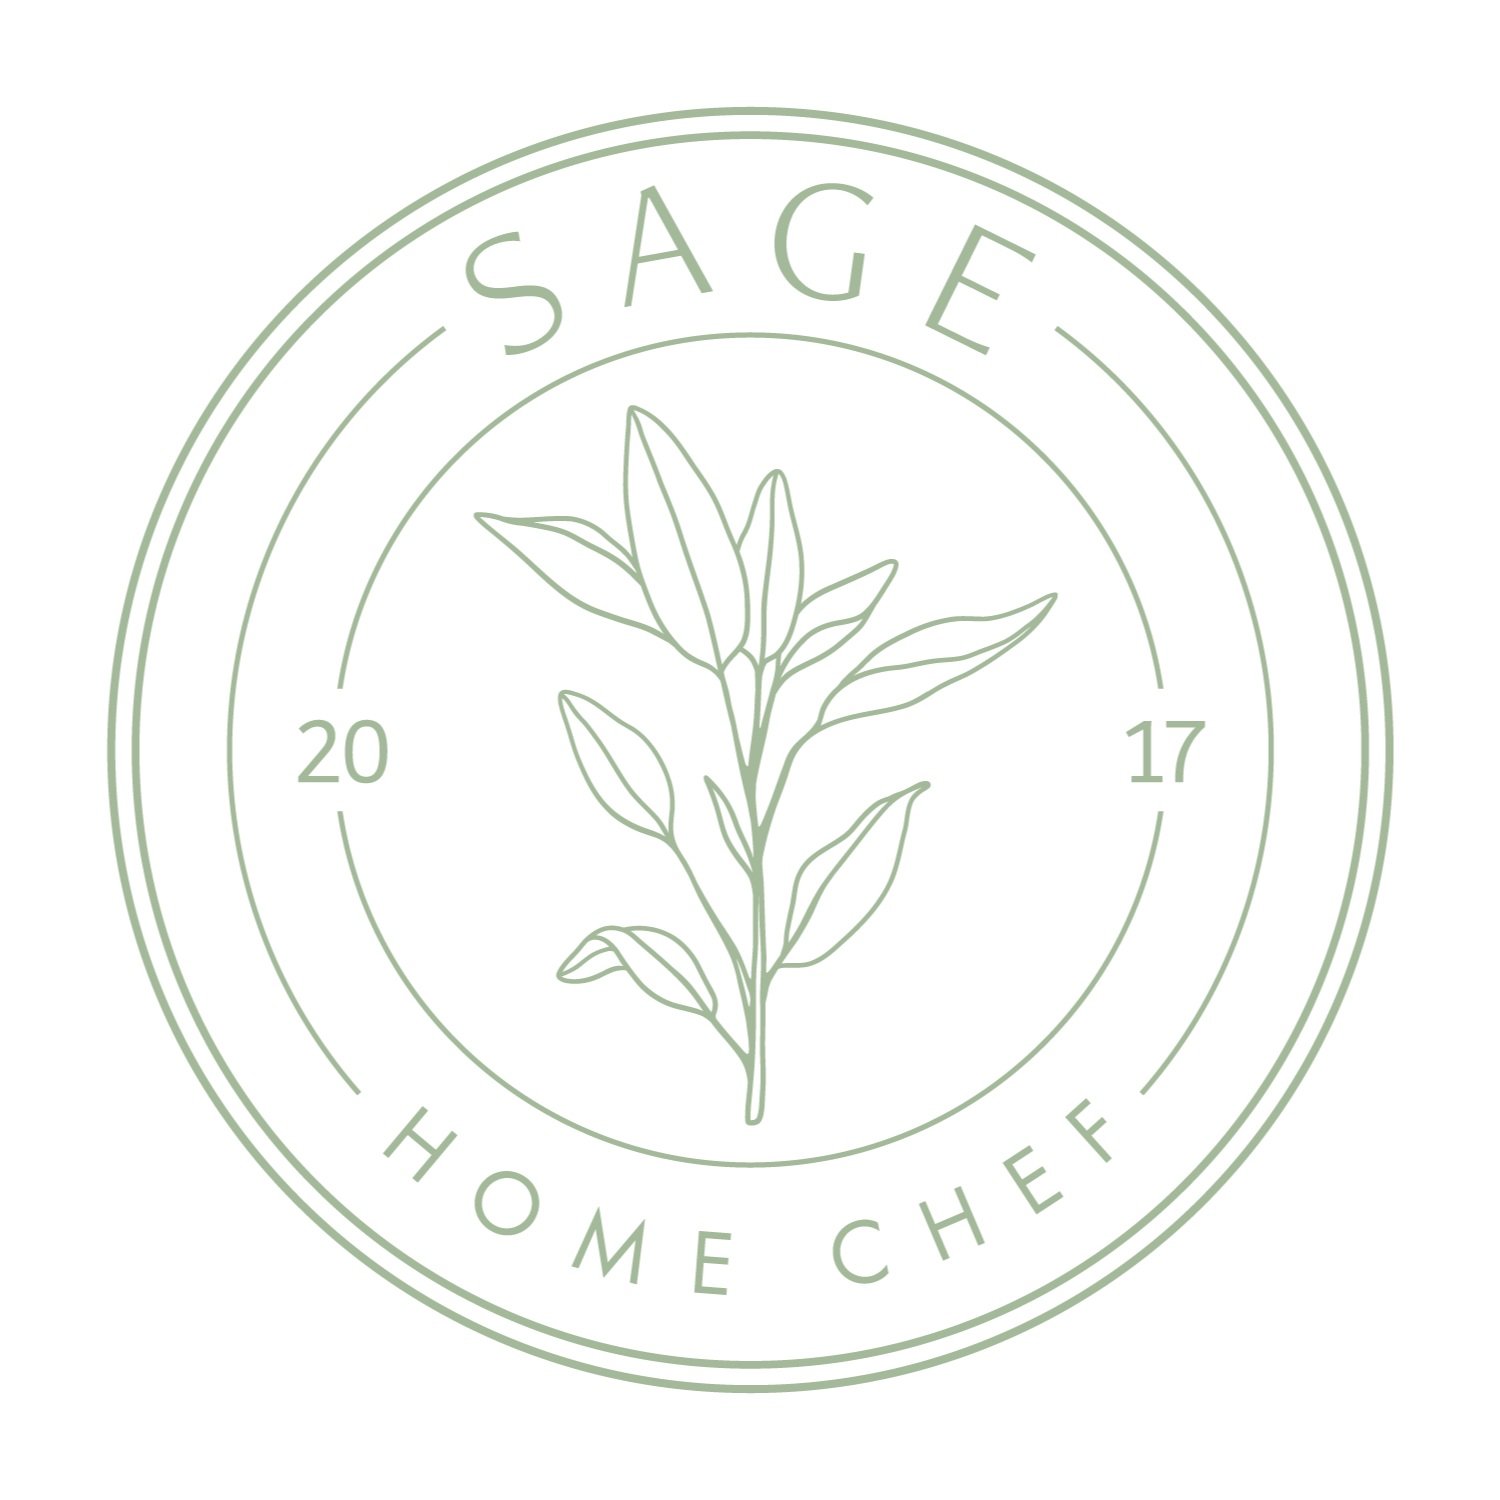 Sage Home Chef